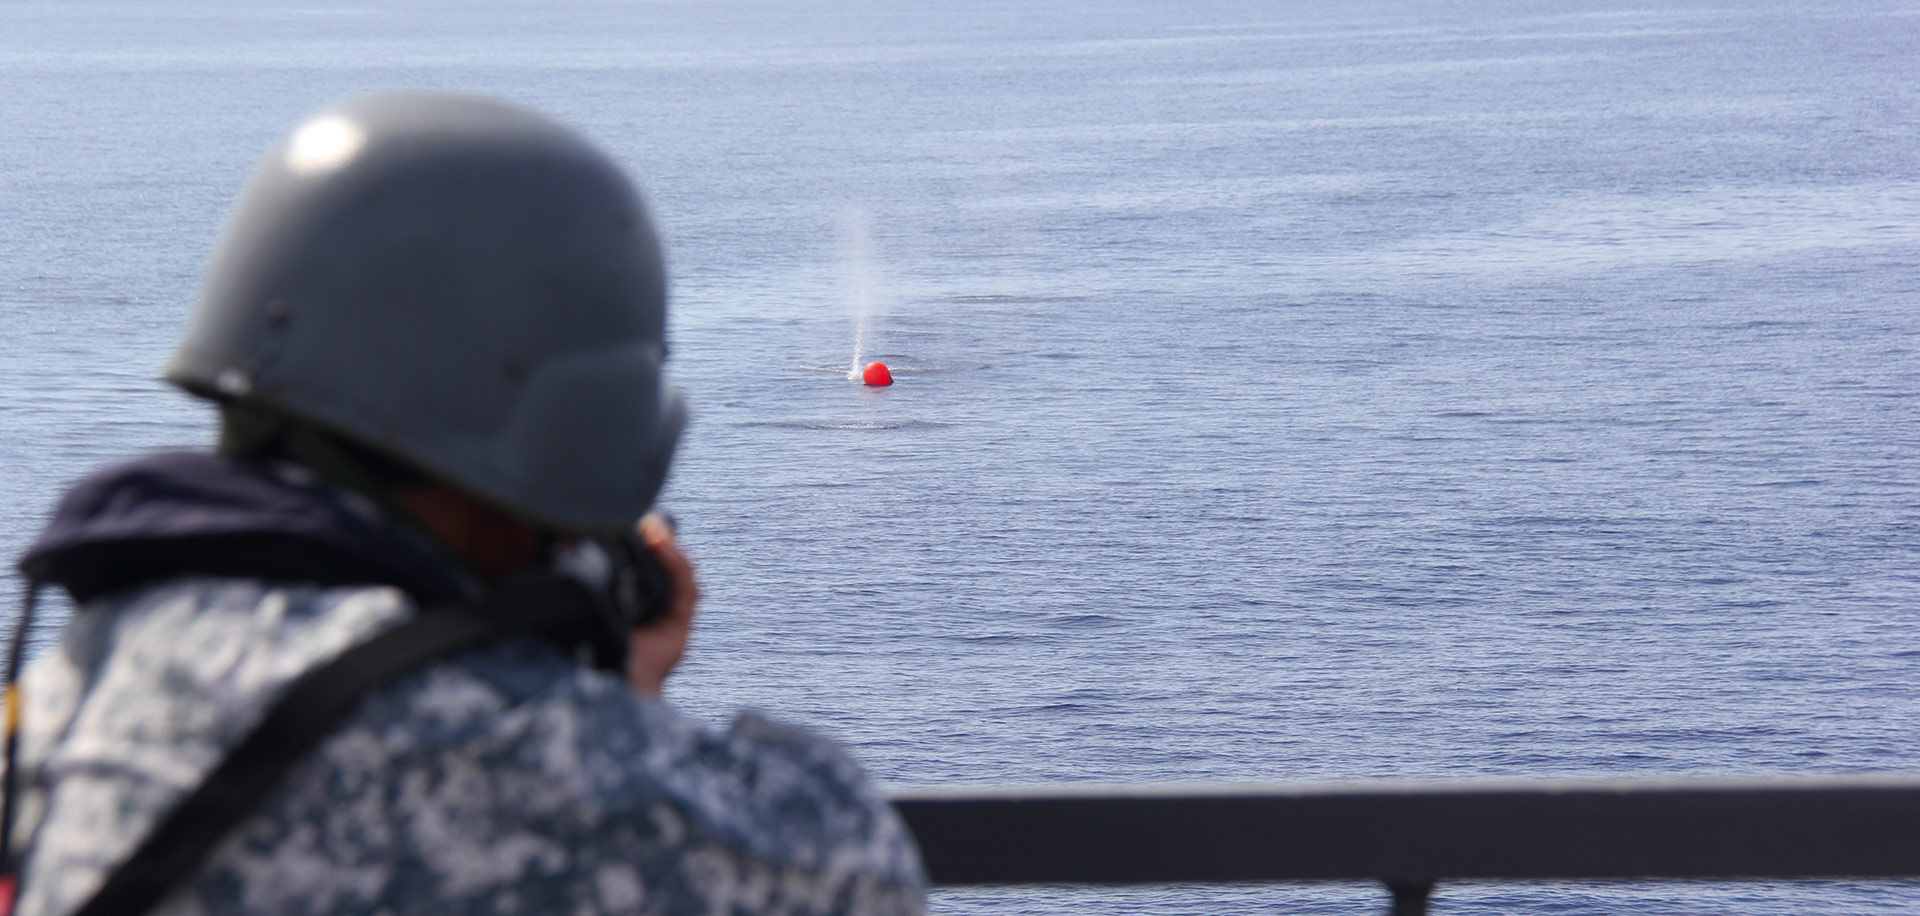 Shooting practice on board Navy ship